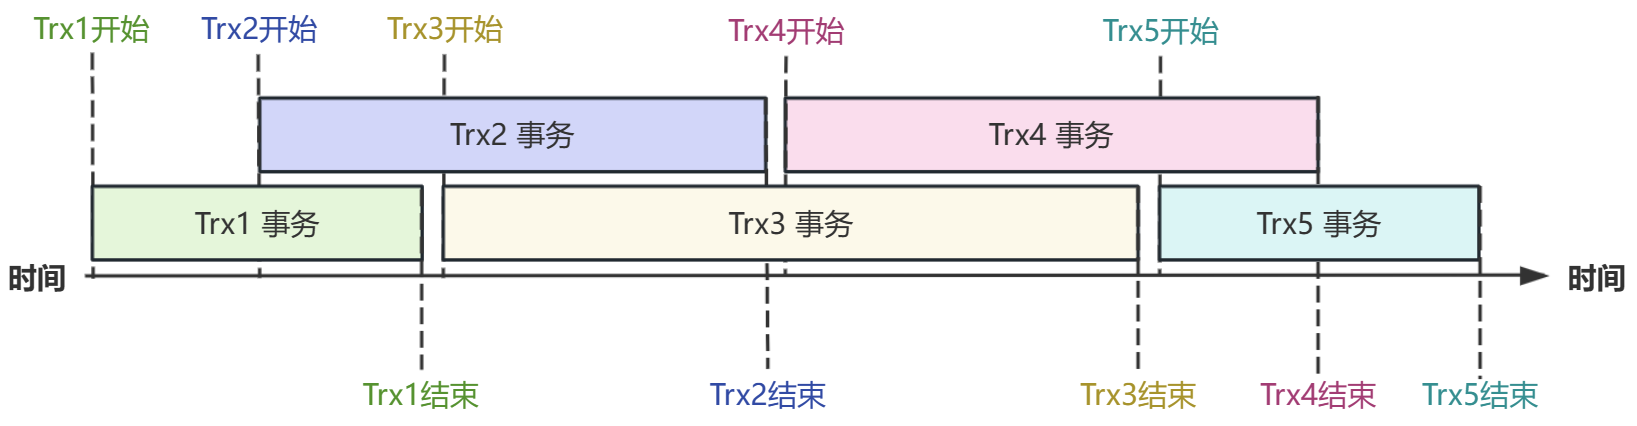 InnoDB-TRX-MVCC